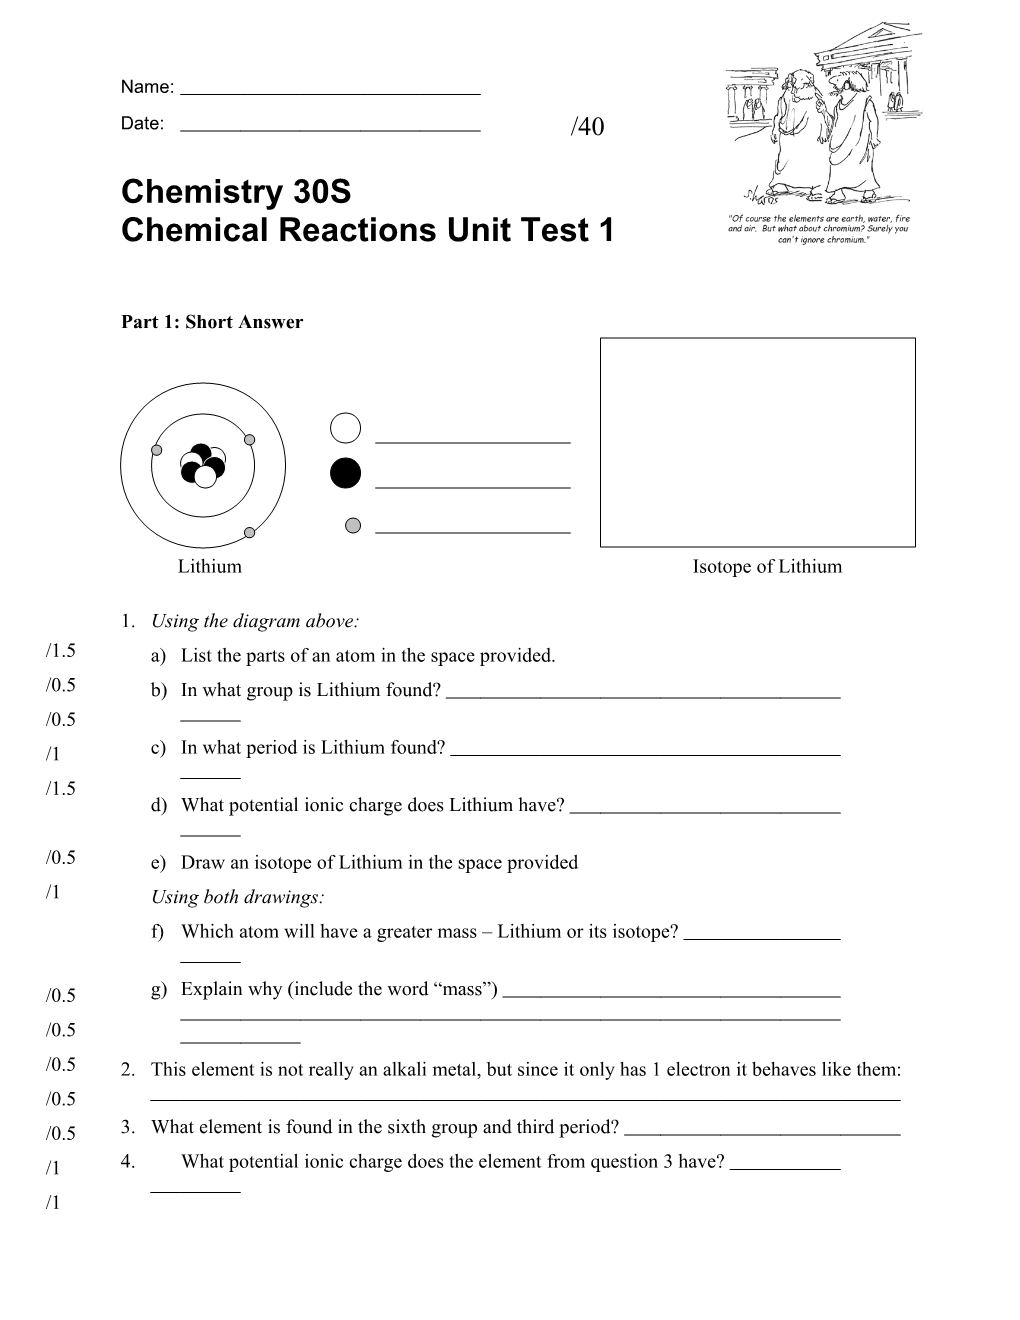 Chemical Reactions Unit Test 1